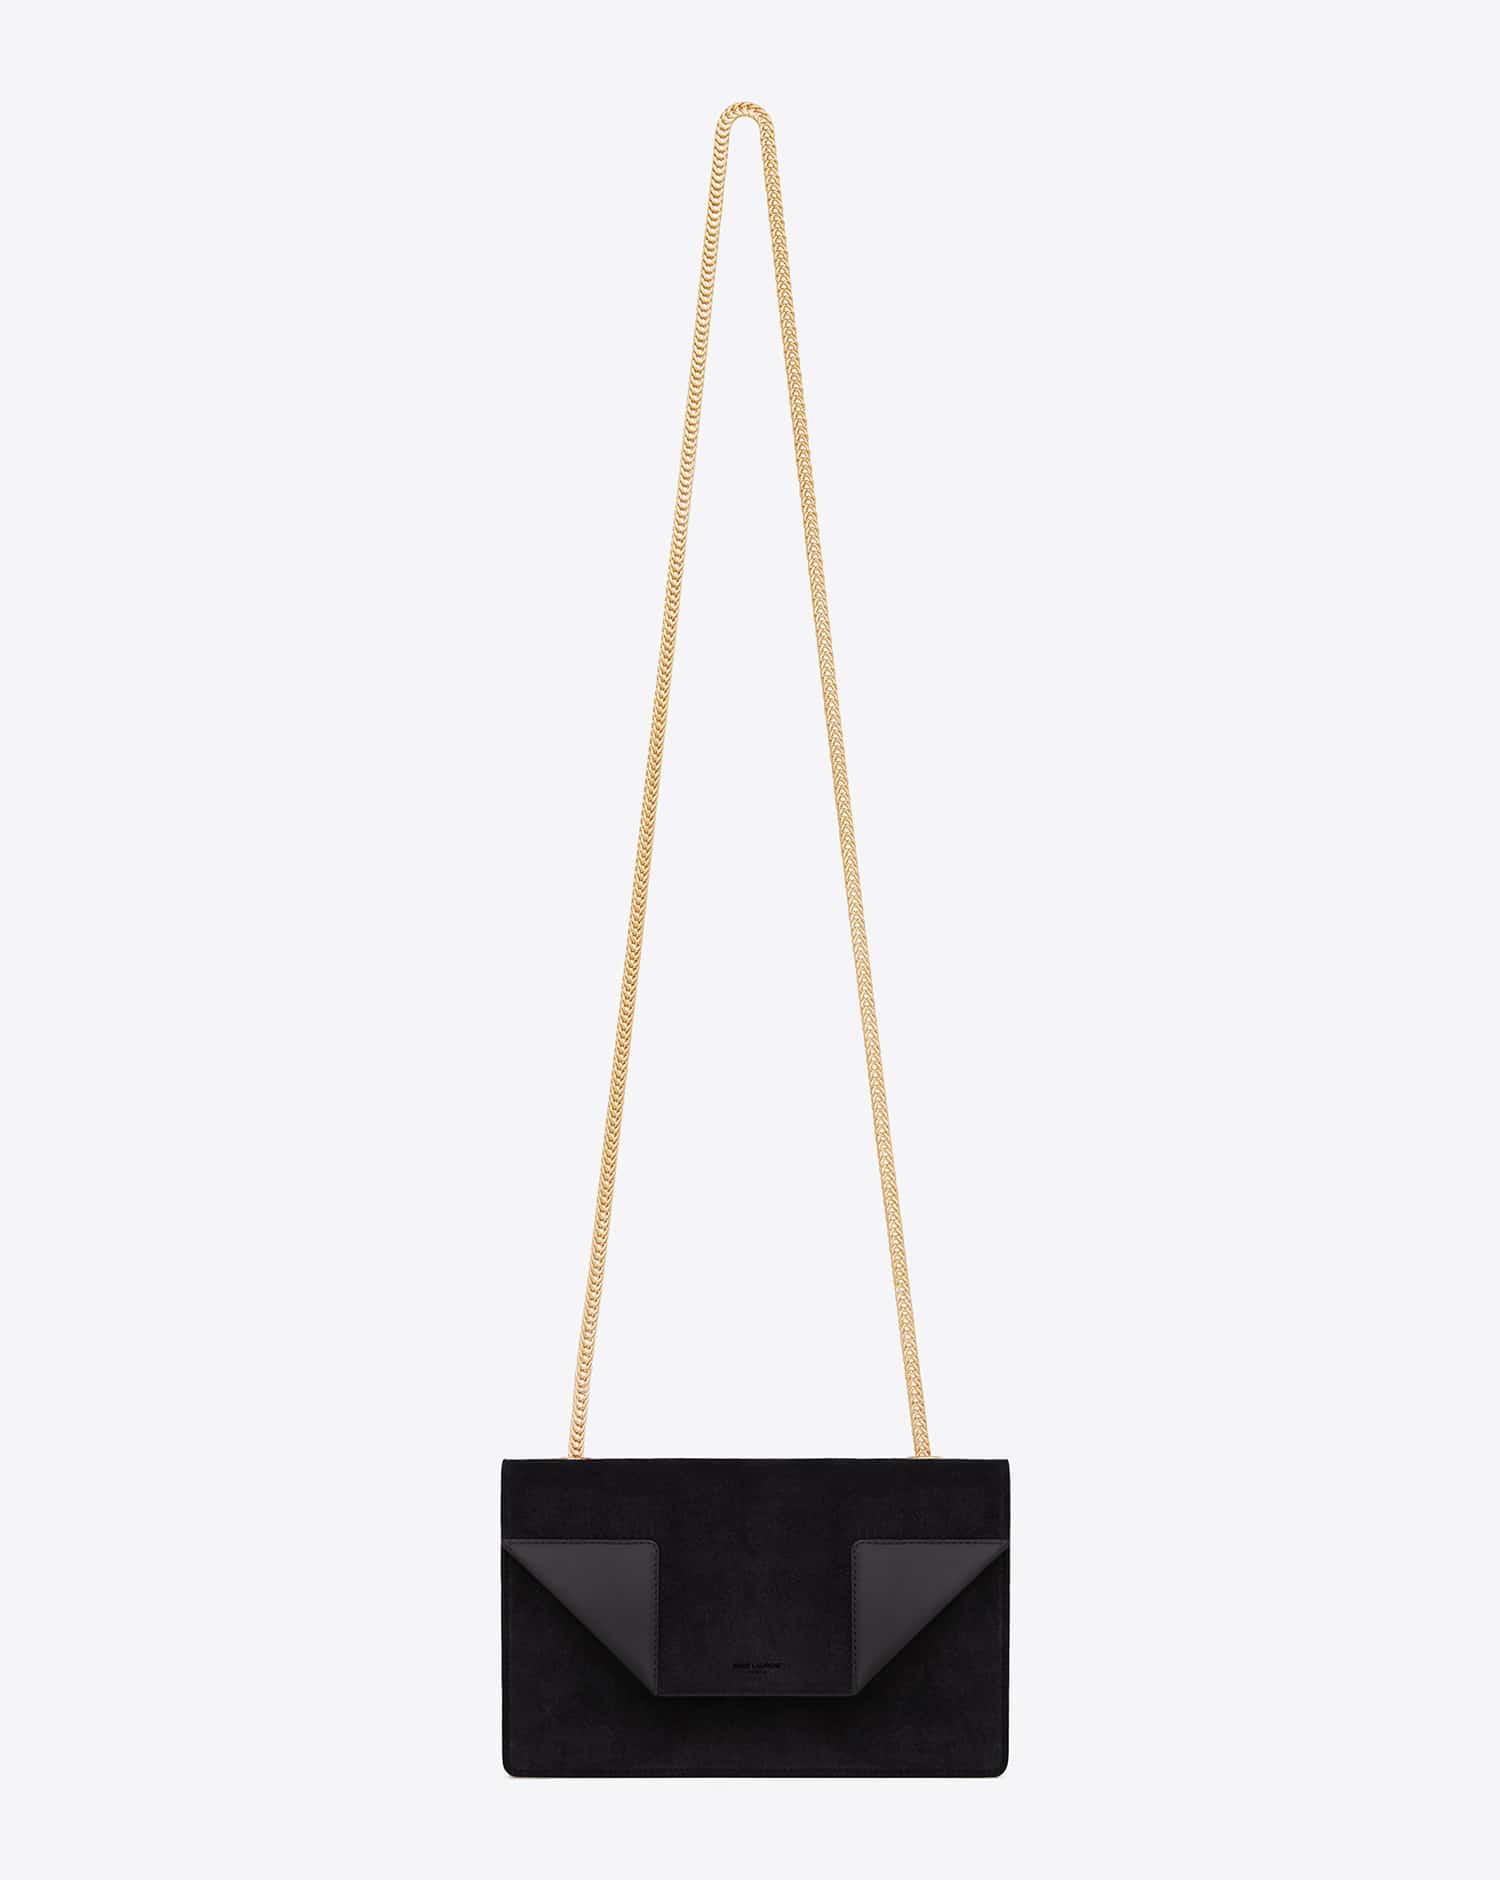 Соломенная сумка Saint Laurent Rive gauche. Batty сумки. Сумка с зерном. Saint Laurent Classic Medium Betty Shoulder.